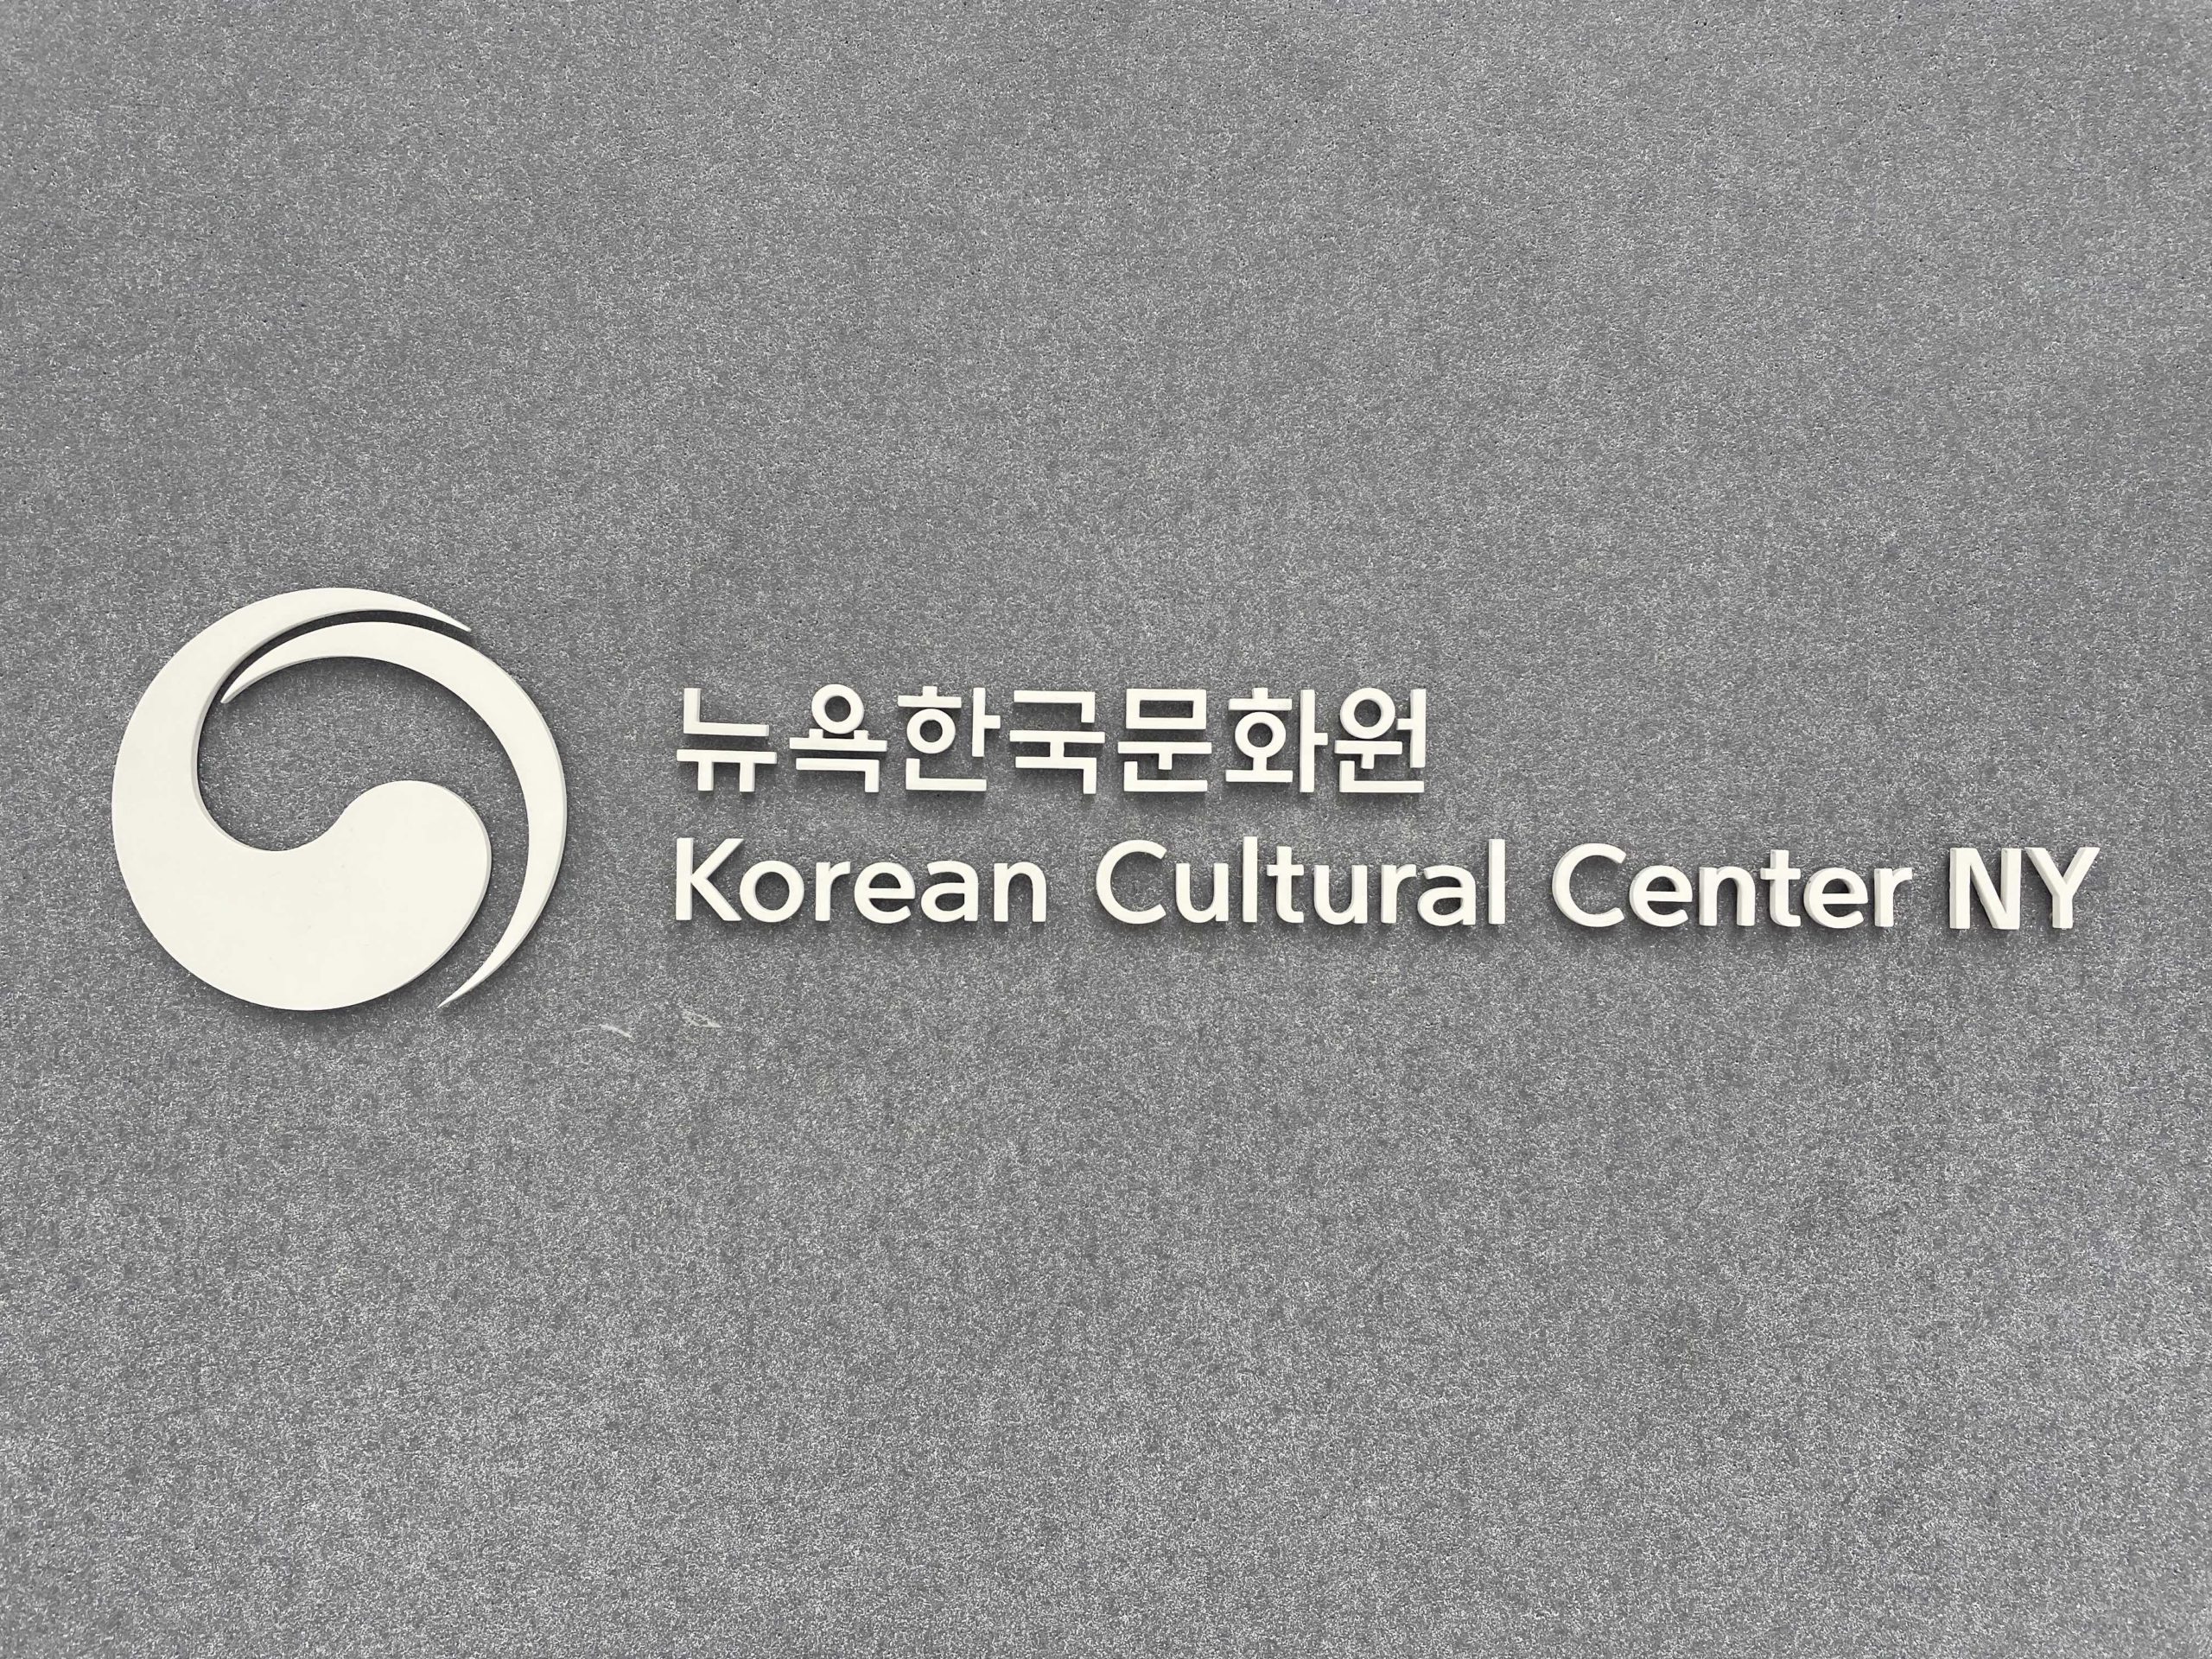 New Venue @ Korean Cultural Center New York